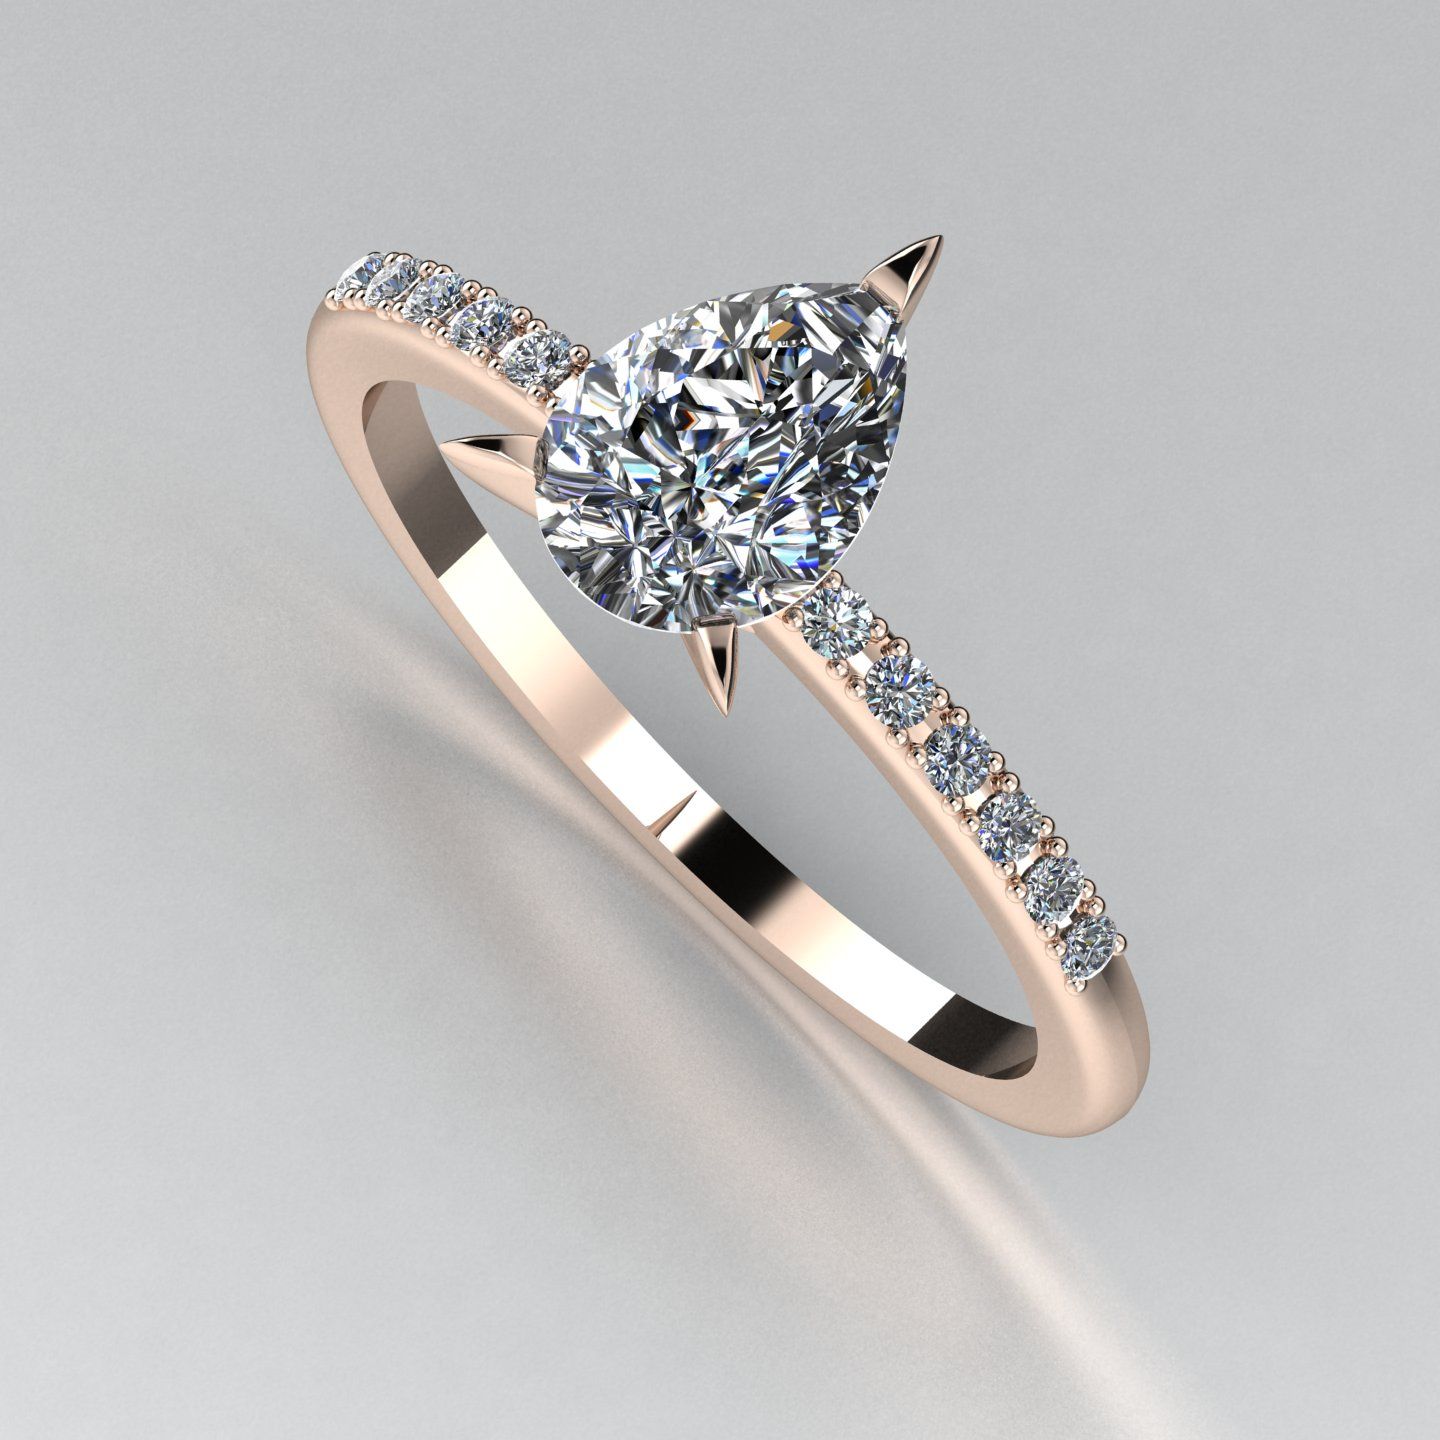 The Calista Diamond Ring